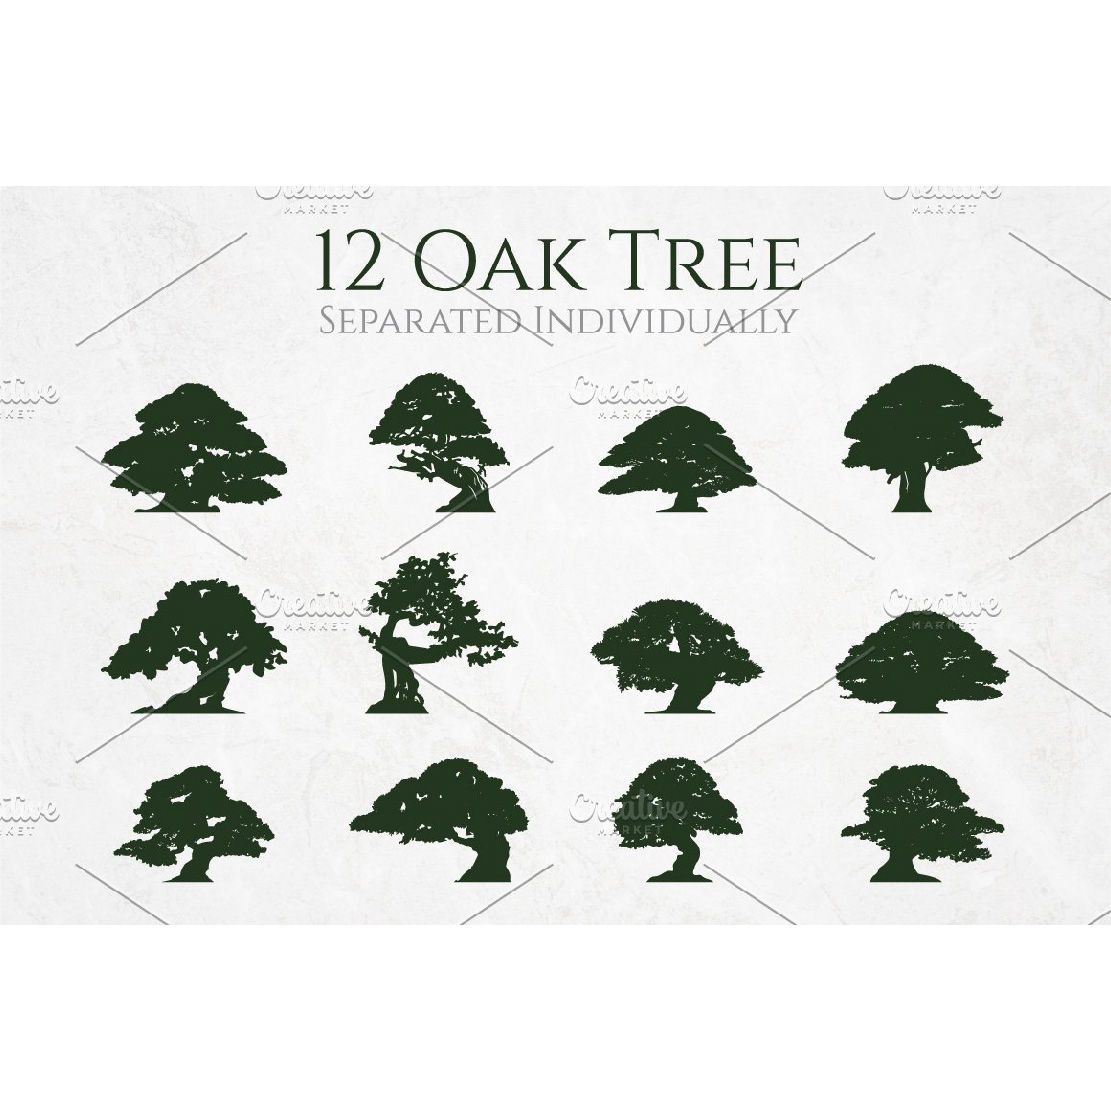 Artistic Big Oak Tree Silhouette Set cover image.